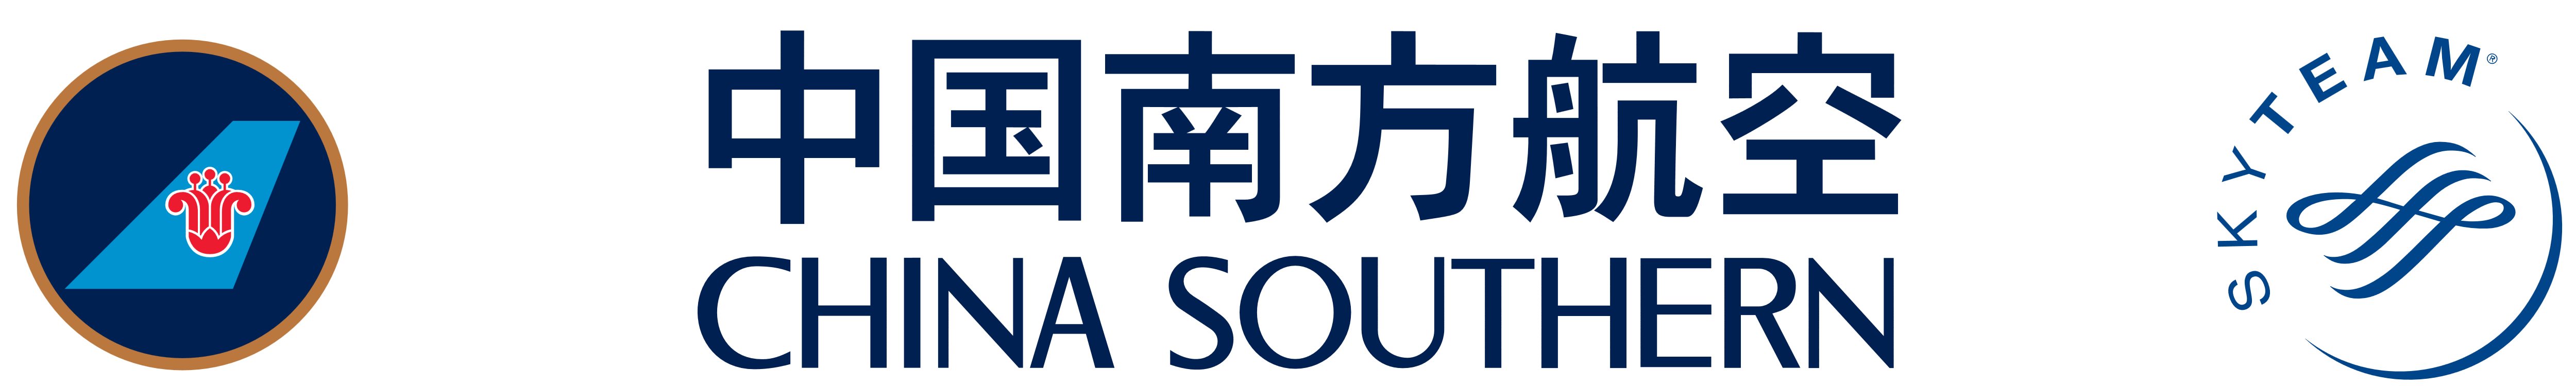 China Southern Airlines Logo, Emblem, Logotype - China Southern Airlines, Transparent background PNG HD thumbnail